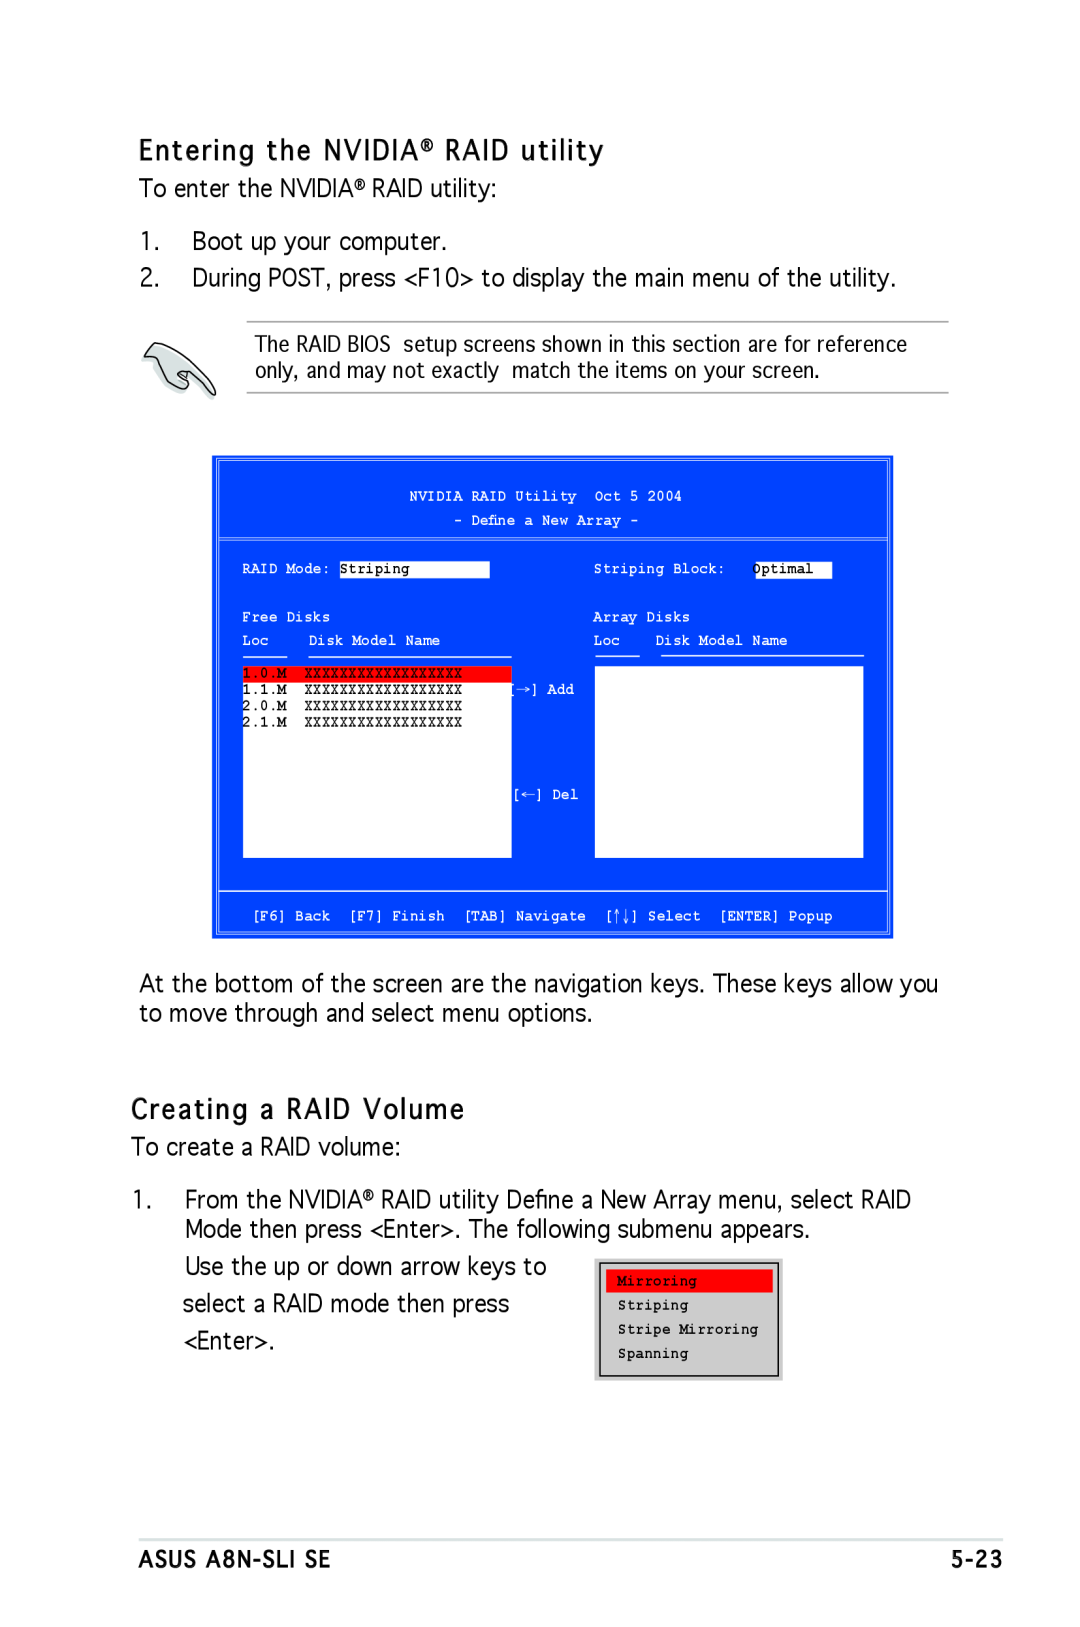 Asus A8N-SLI SE manual Entering the NVIDIA RAID utility, Creating a RAID Volume 